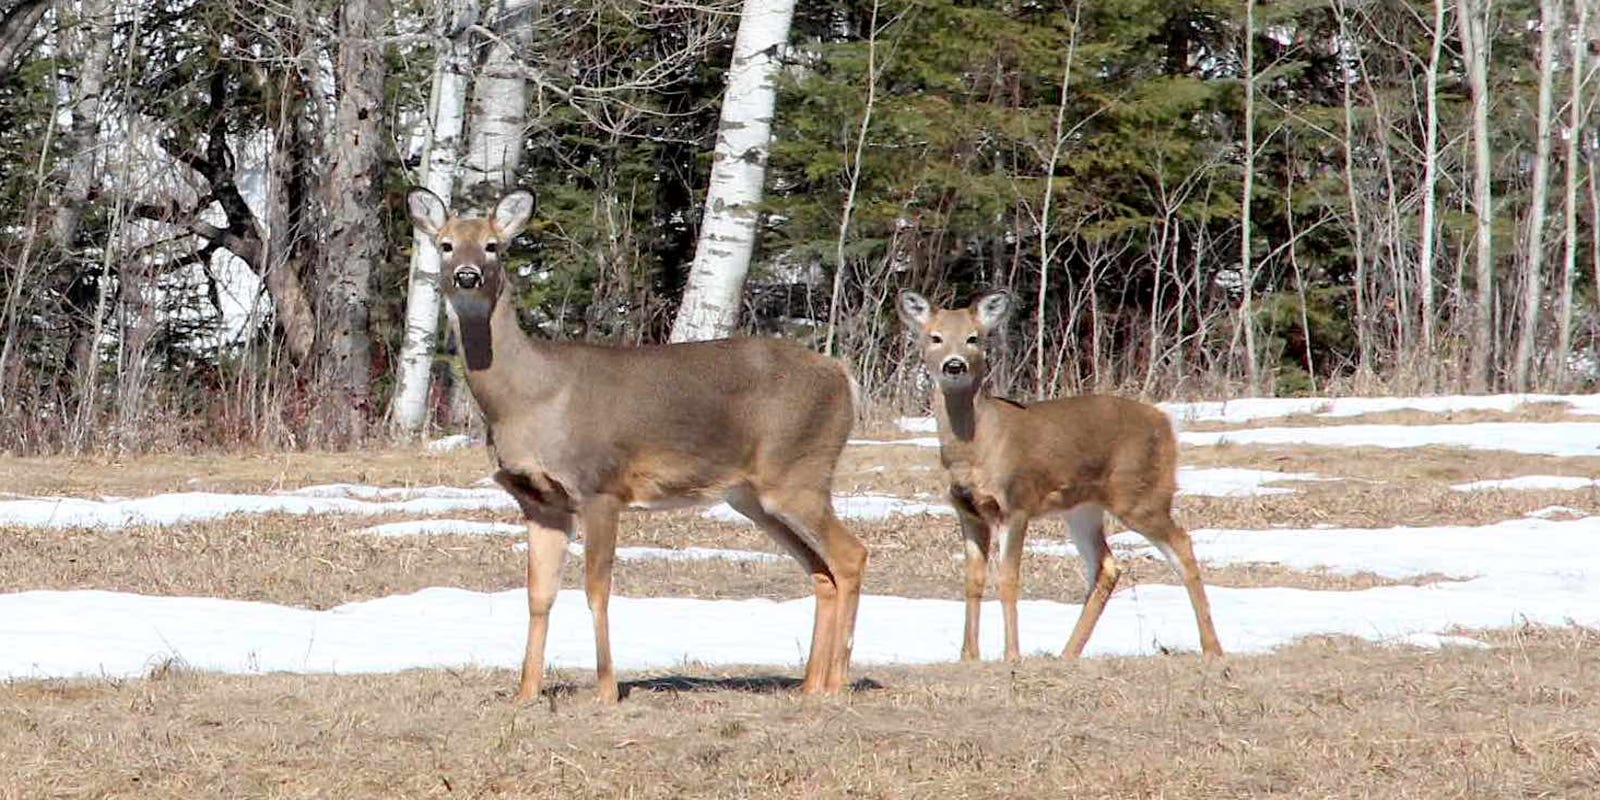 Pa. hunting Antlerless deer license applications could see big changes